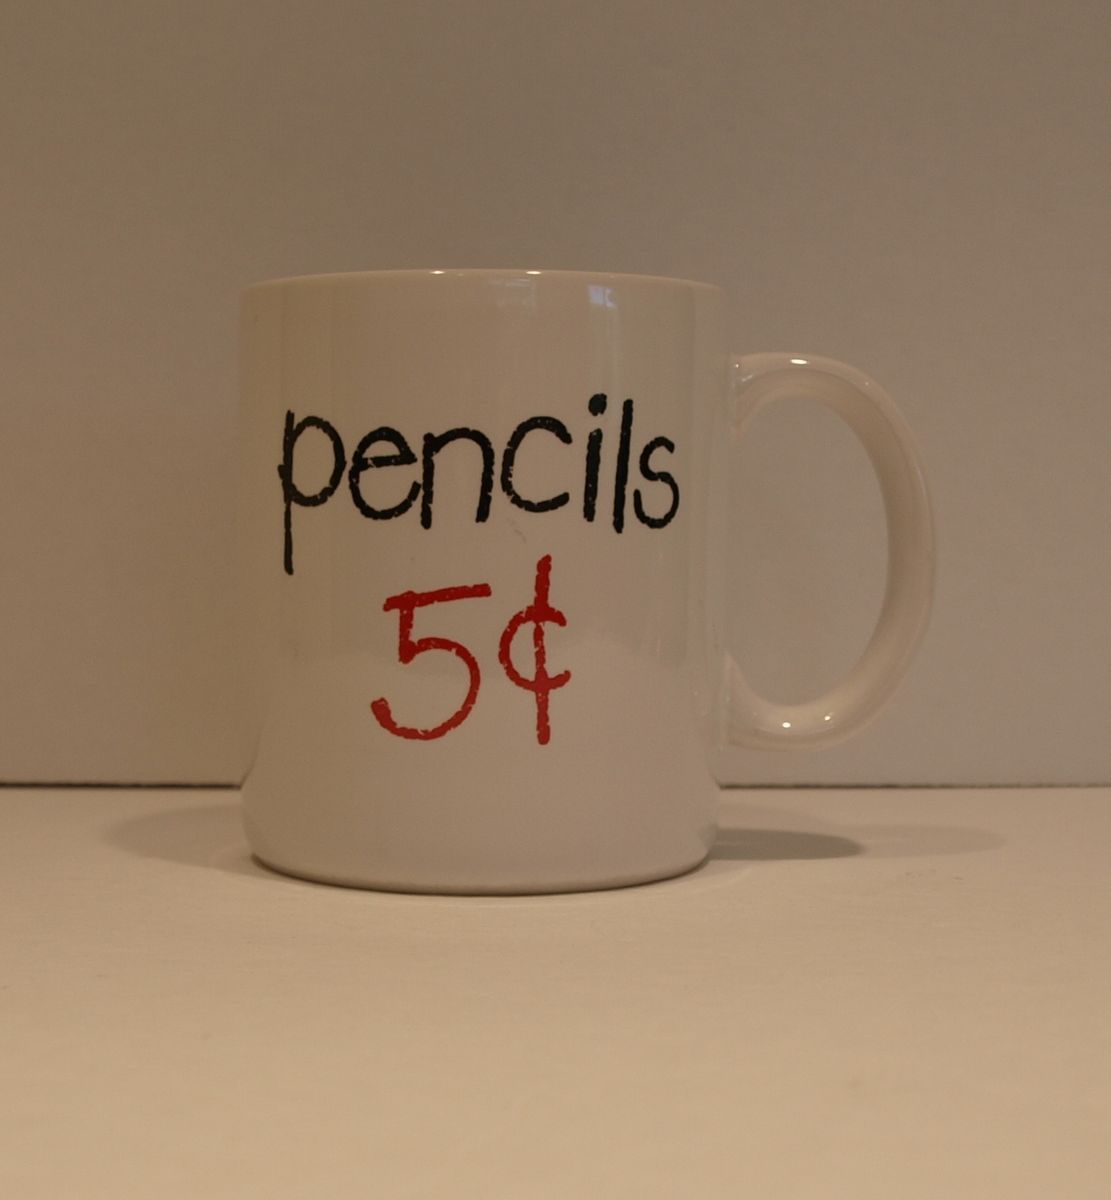 Coffee Mug Hallmark Made in Japan Cute Humorous Simple Pencils 5 Cents